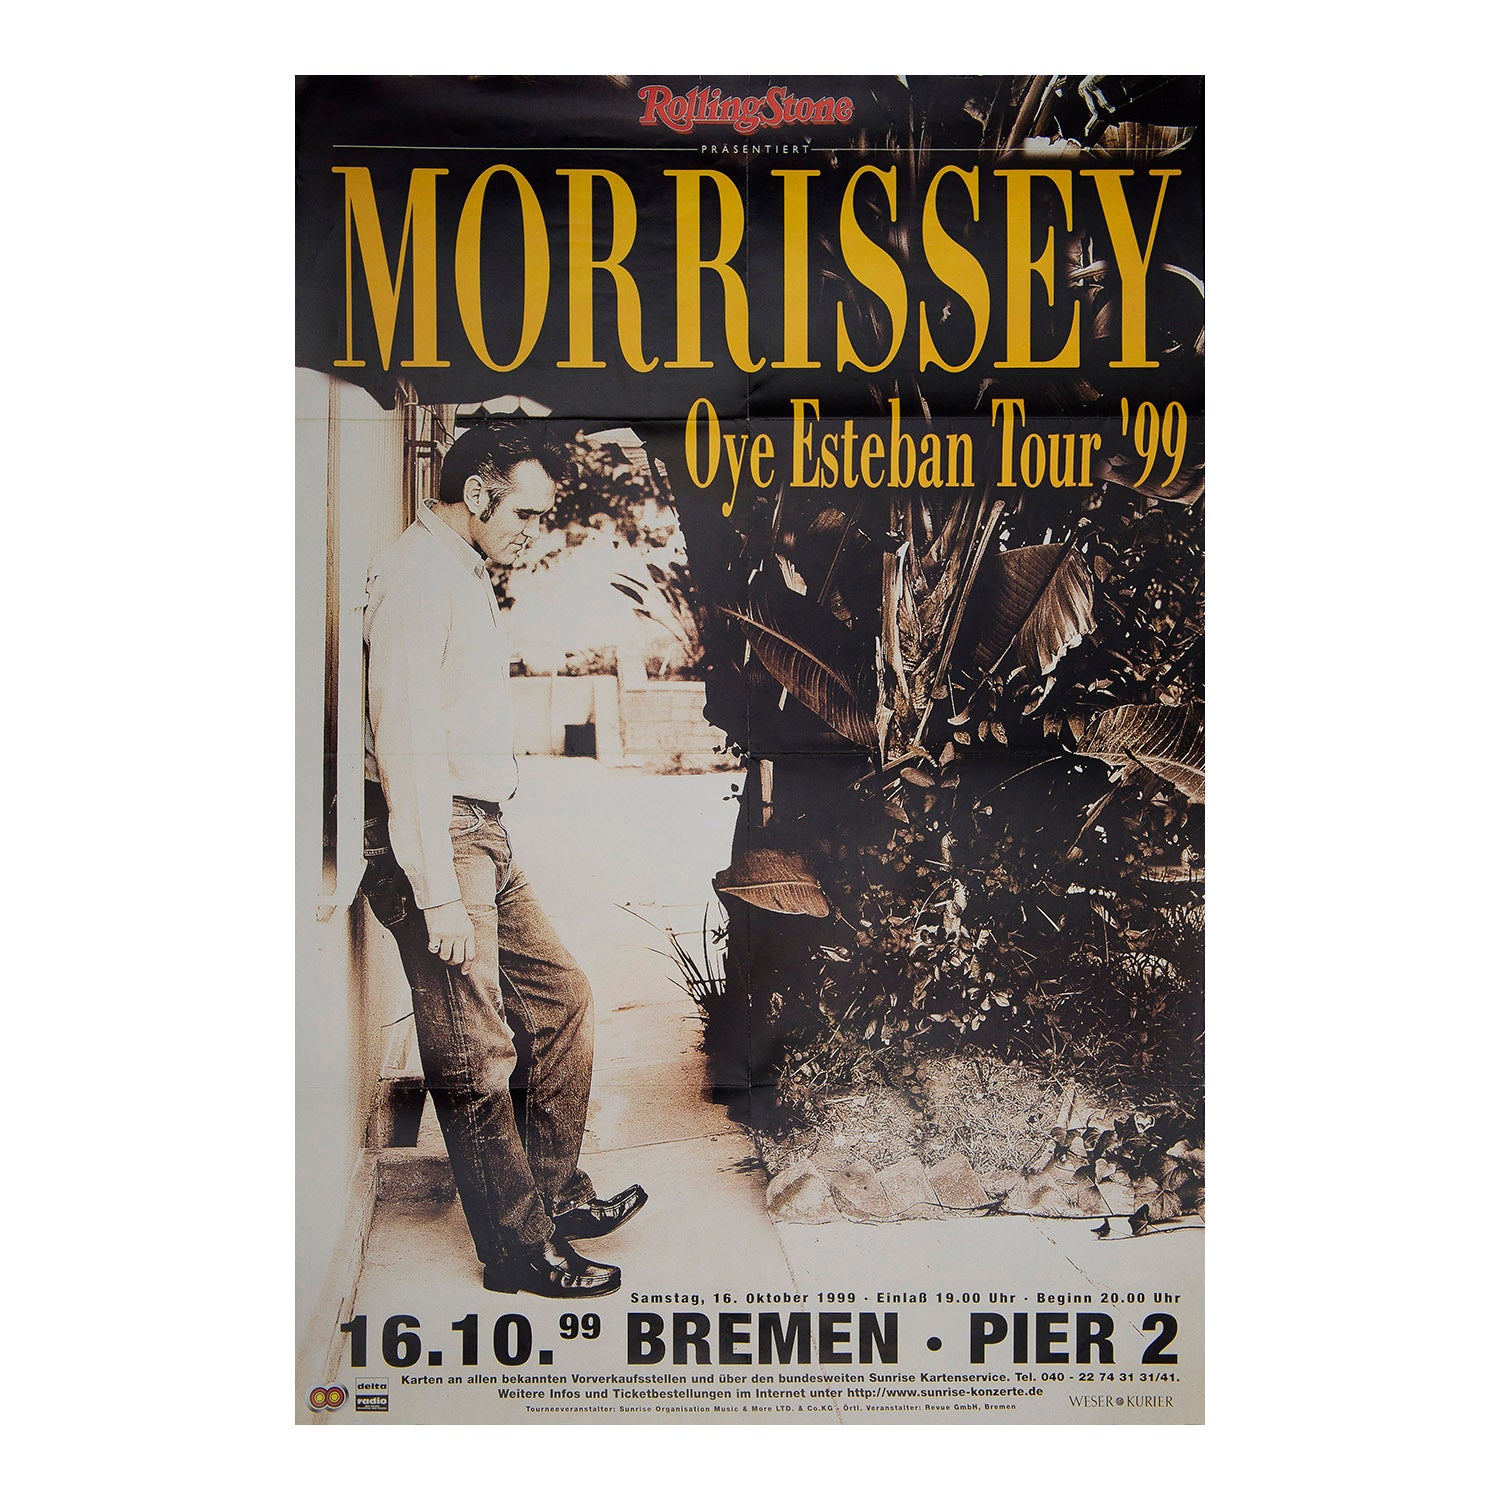 Morrissey. Oye Esteban Tour '99